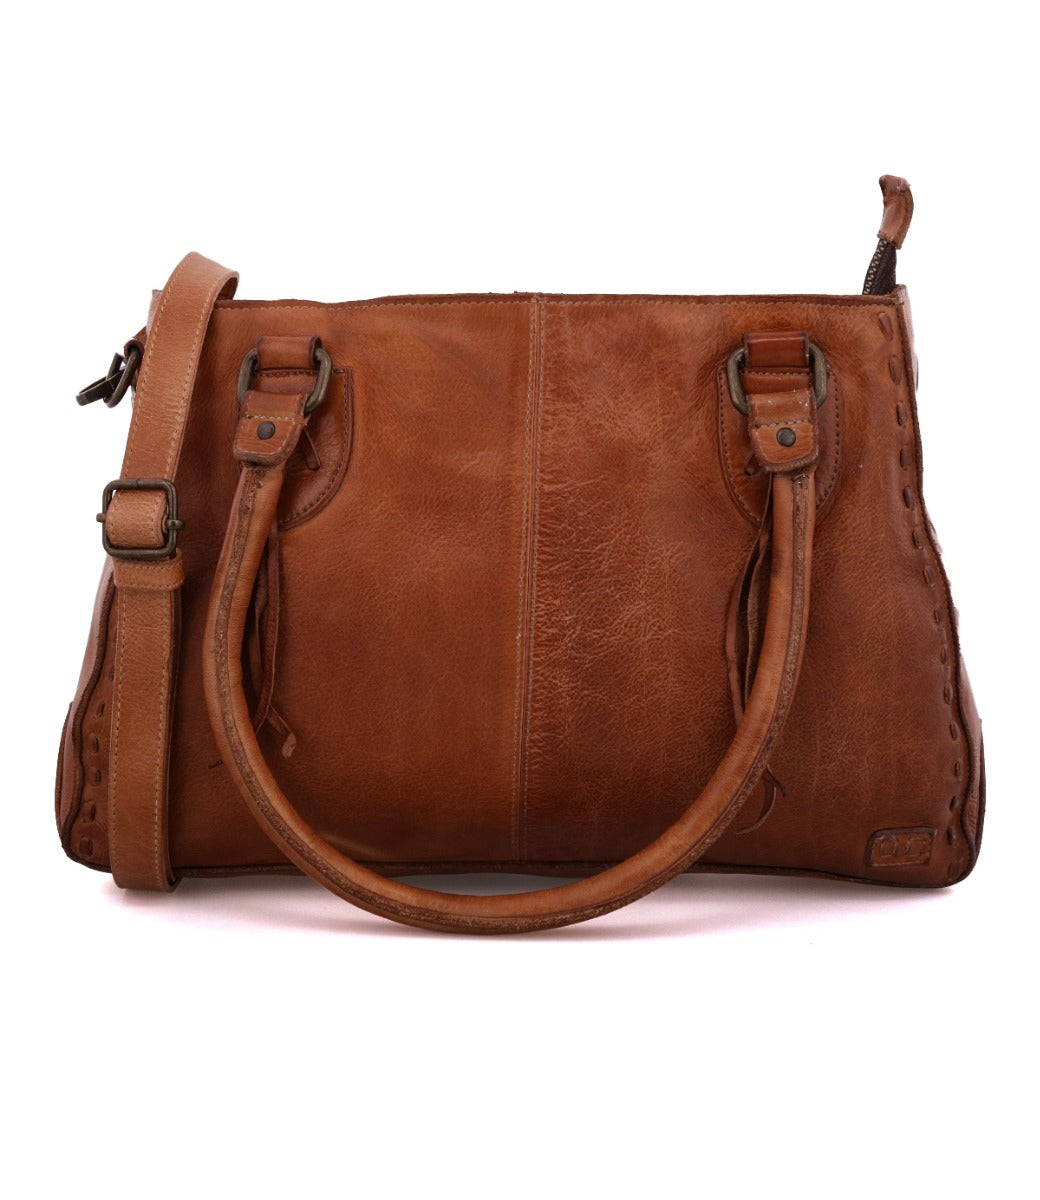 The Rockababy by Bed Stu women's tan leather handbag.